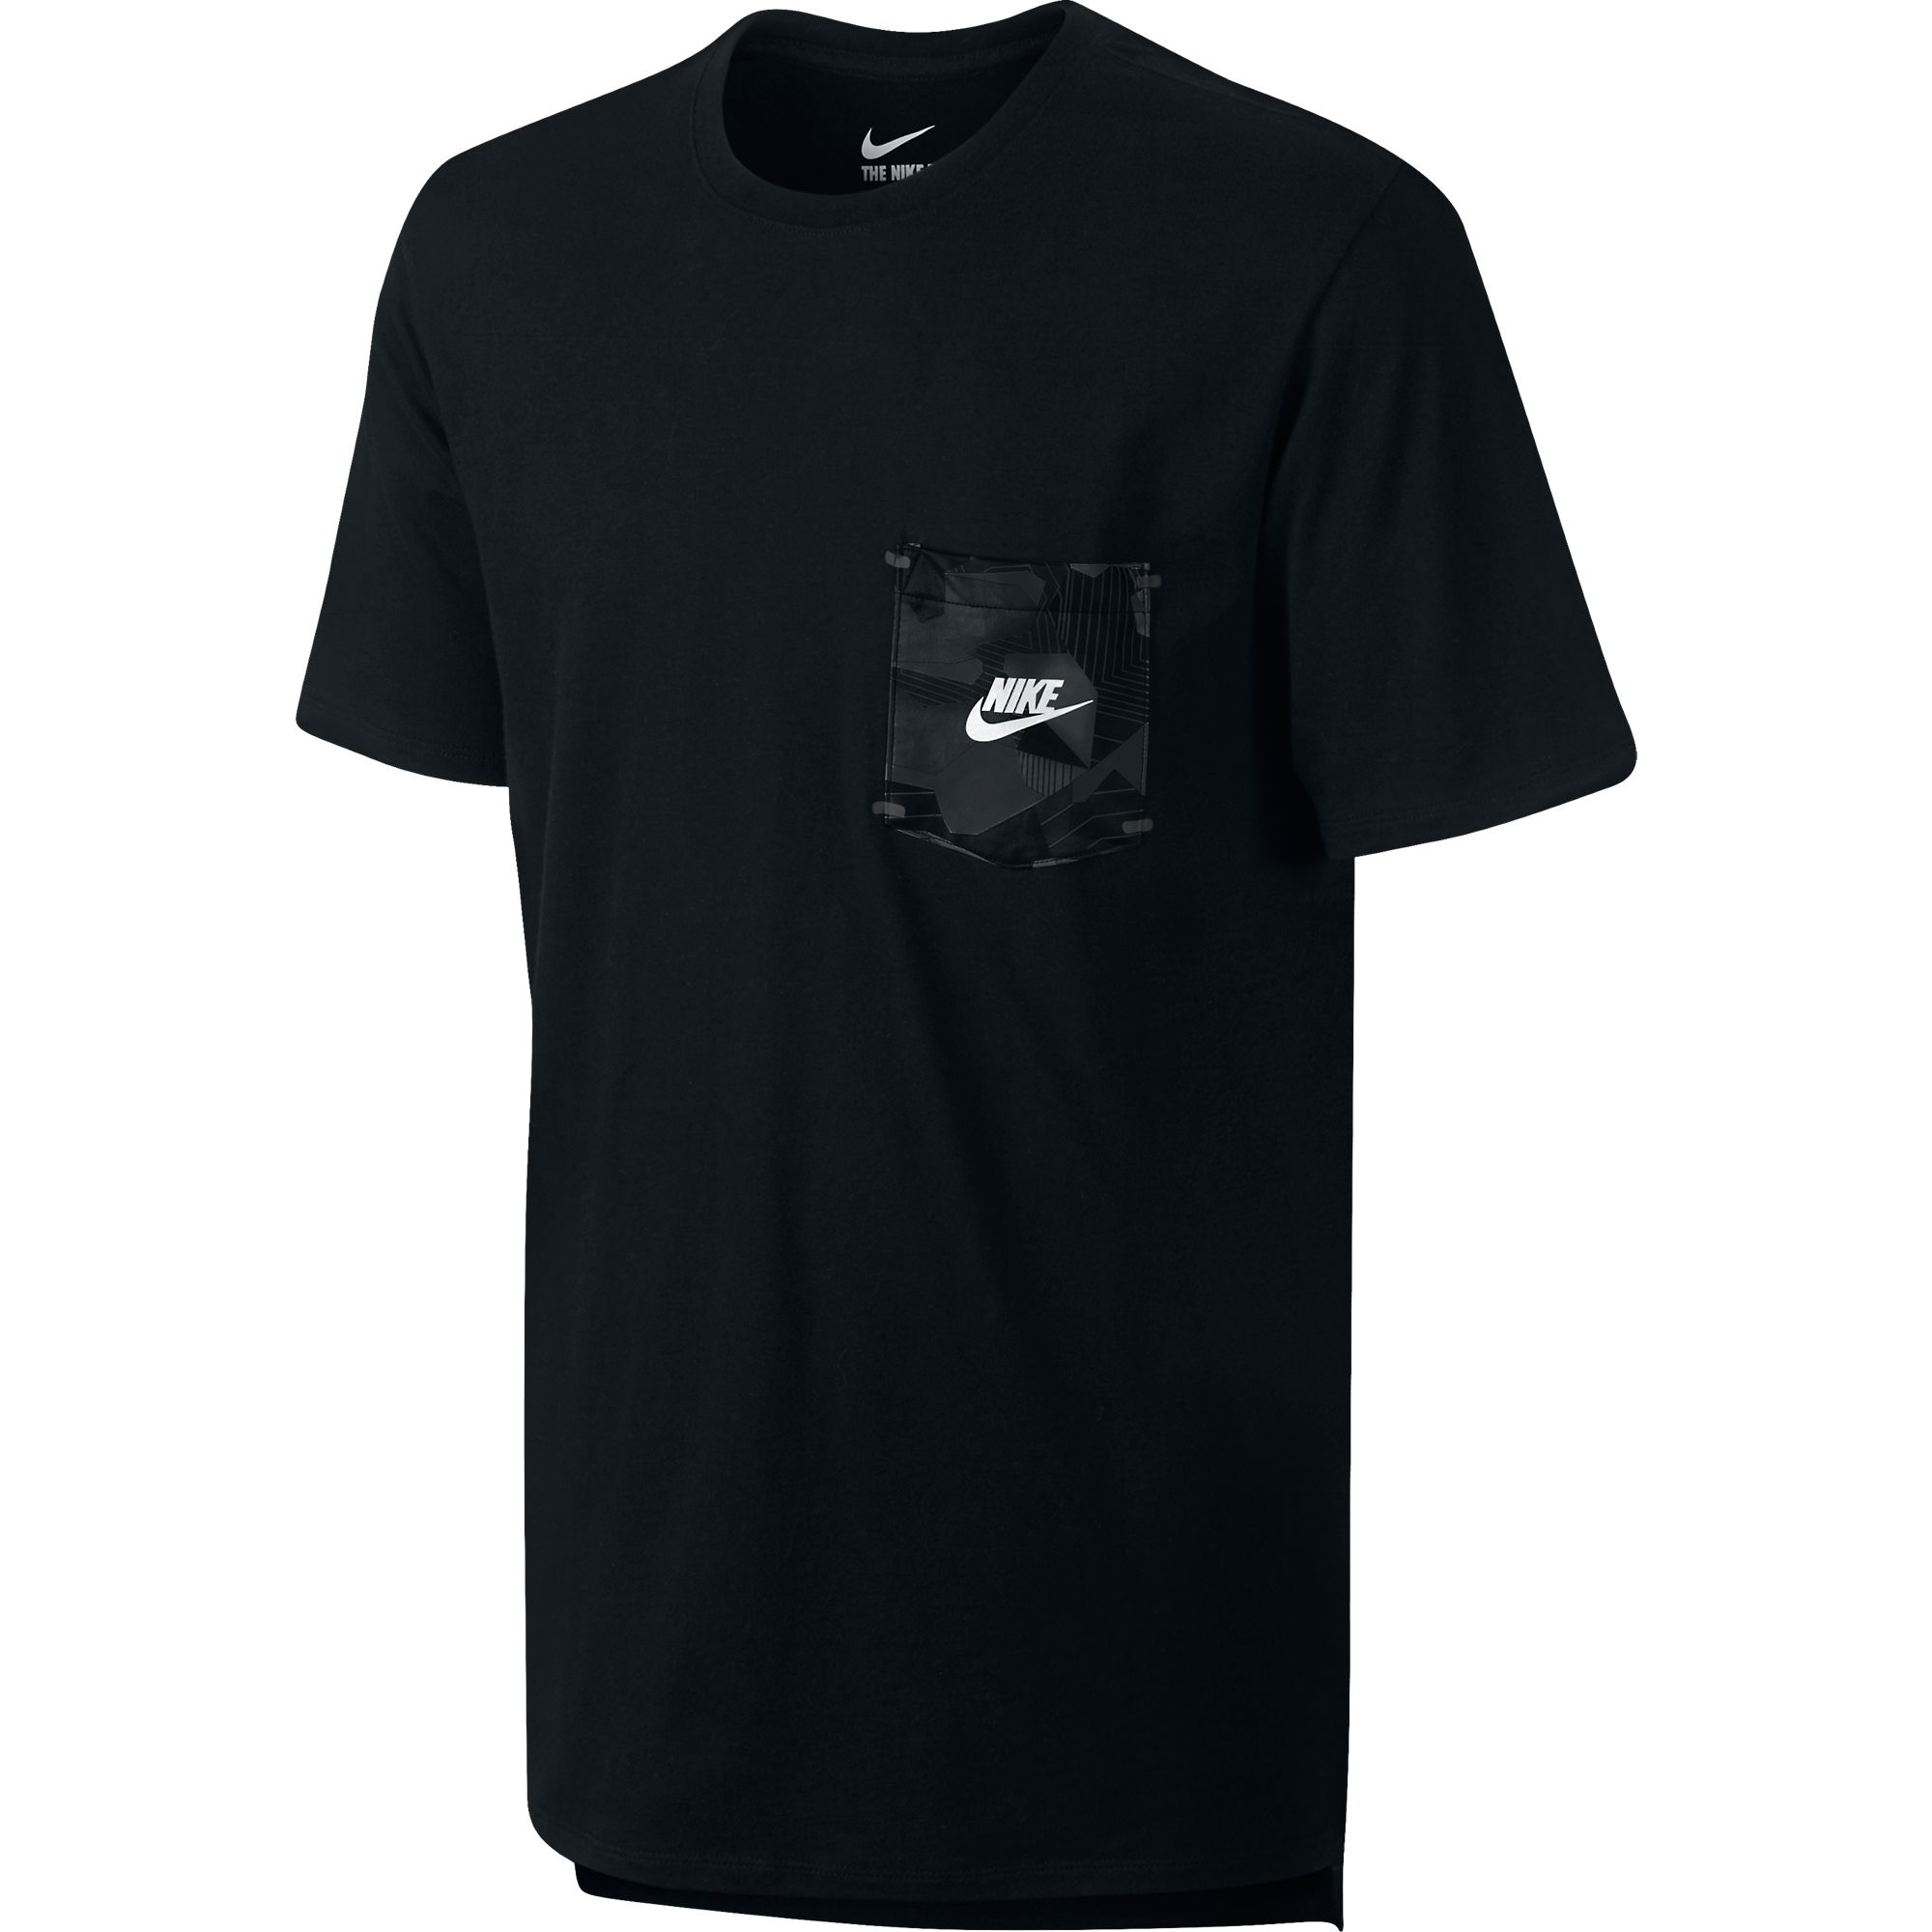 Nike Drop Hem Pocket Men's T-Shirt Black 805208-010 | eBay